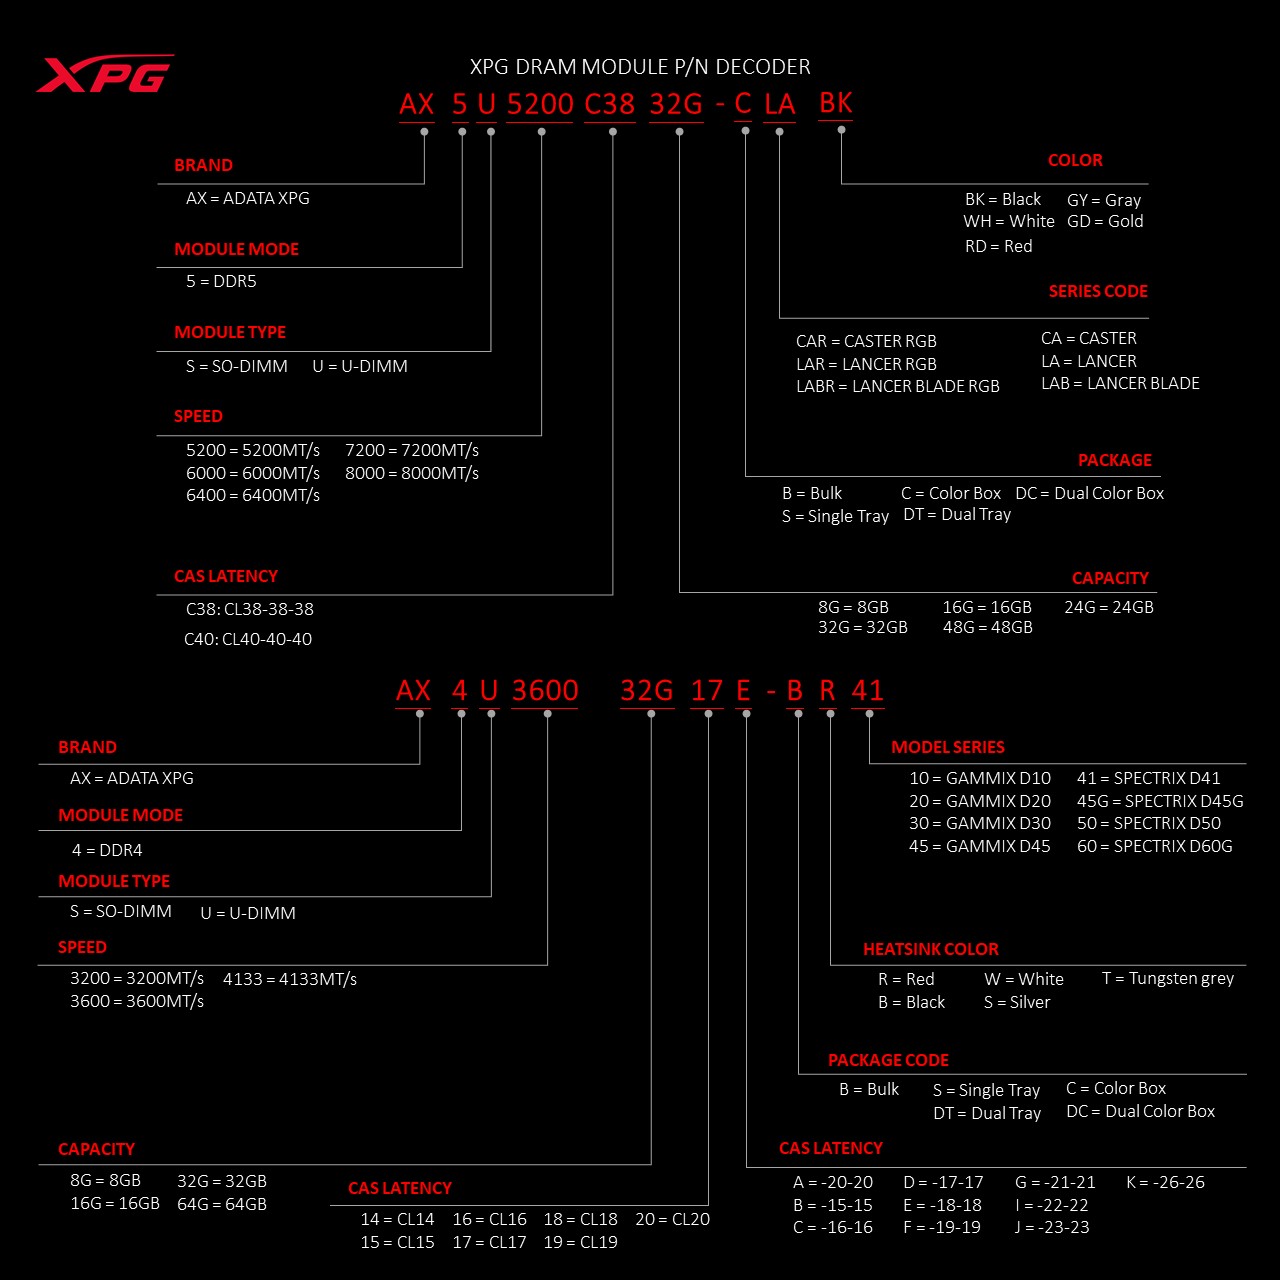 ADATA XPG SPECTRIX D60G DDR4 RGB Memory Module 8G 16GB 32G 3600MHz